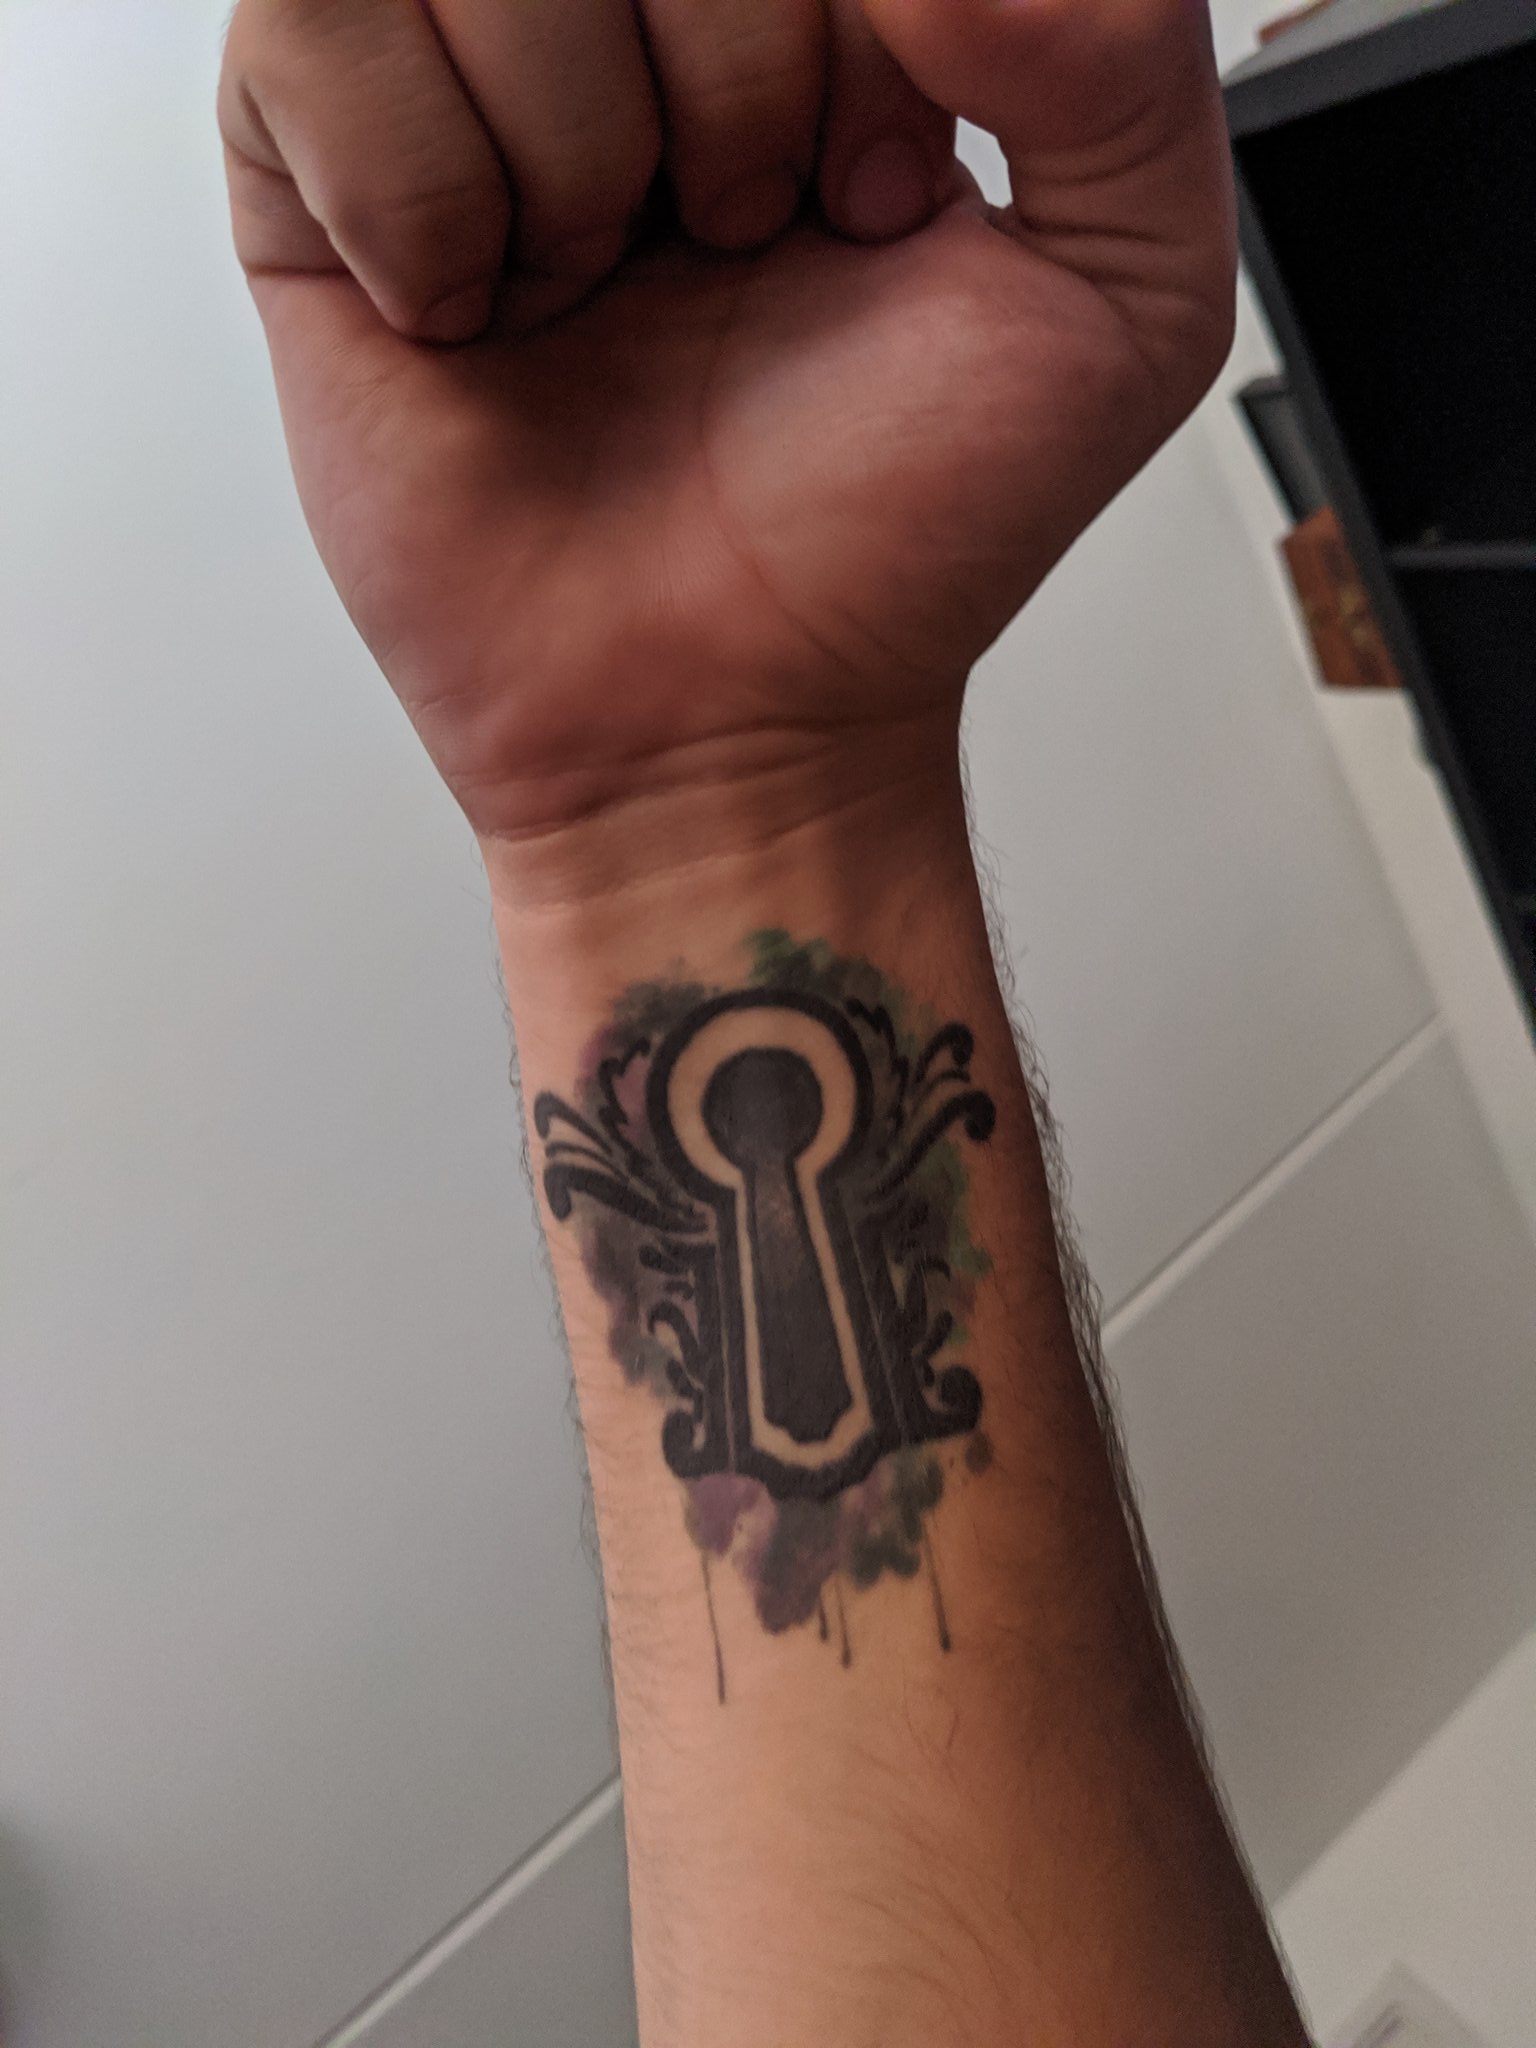 Keyhole tattoo on the right wrist.